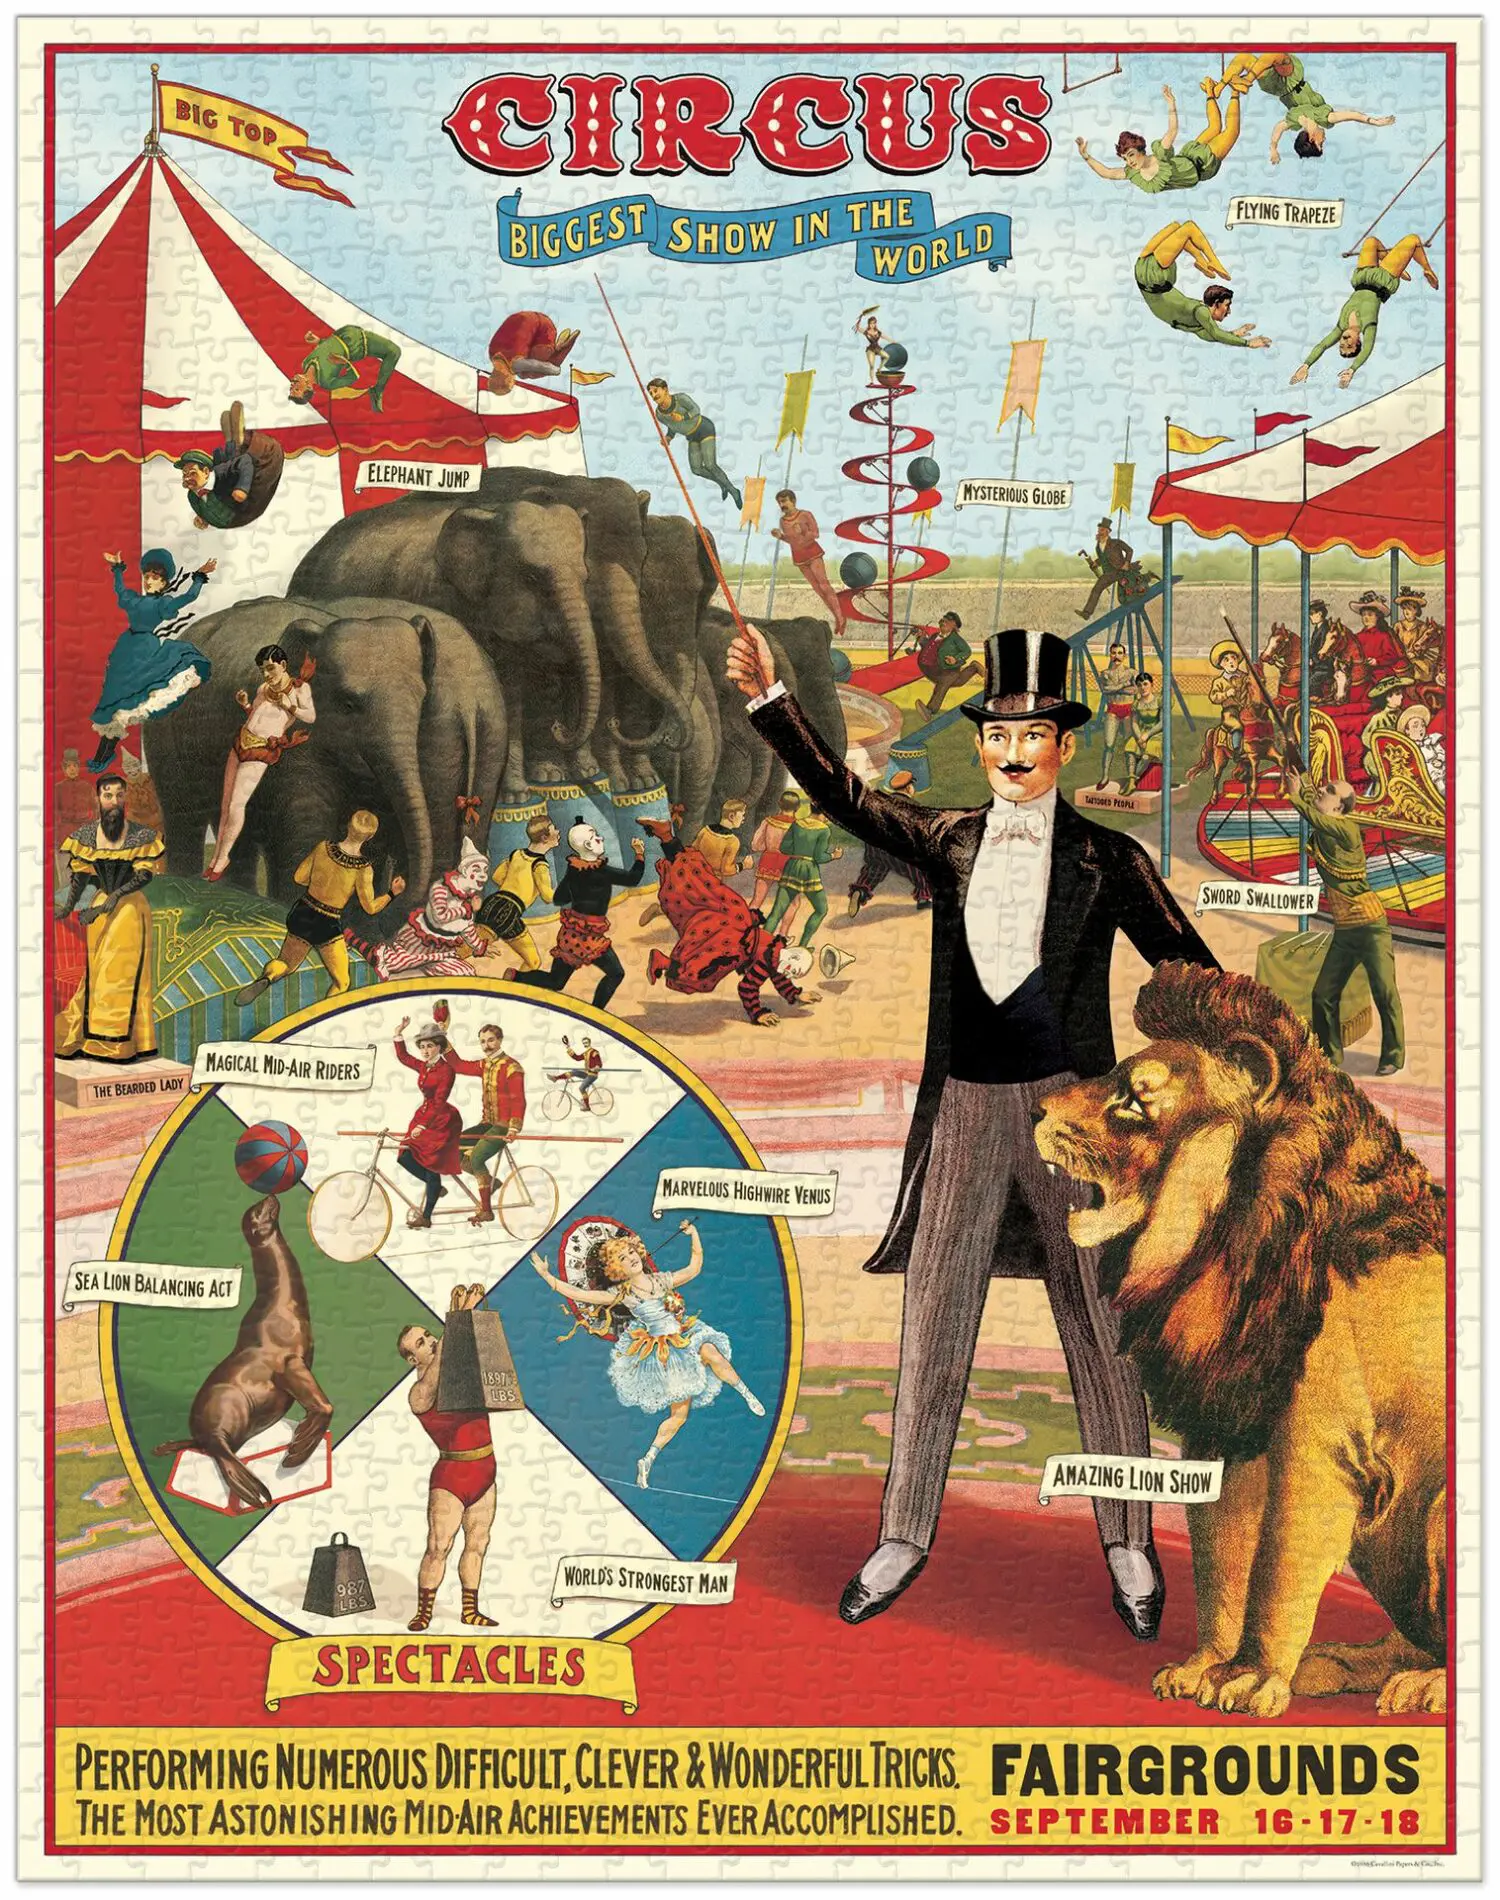 - Circus – Vintage Puzzle - 1000 Teile